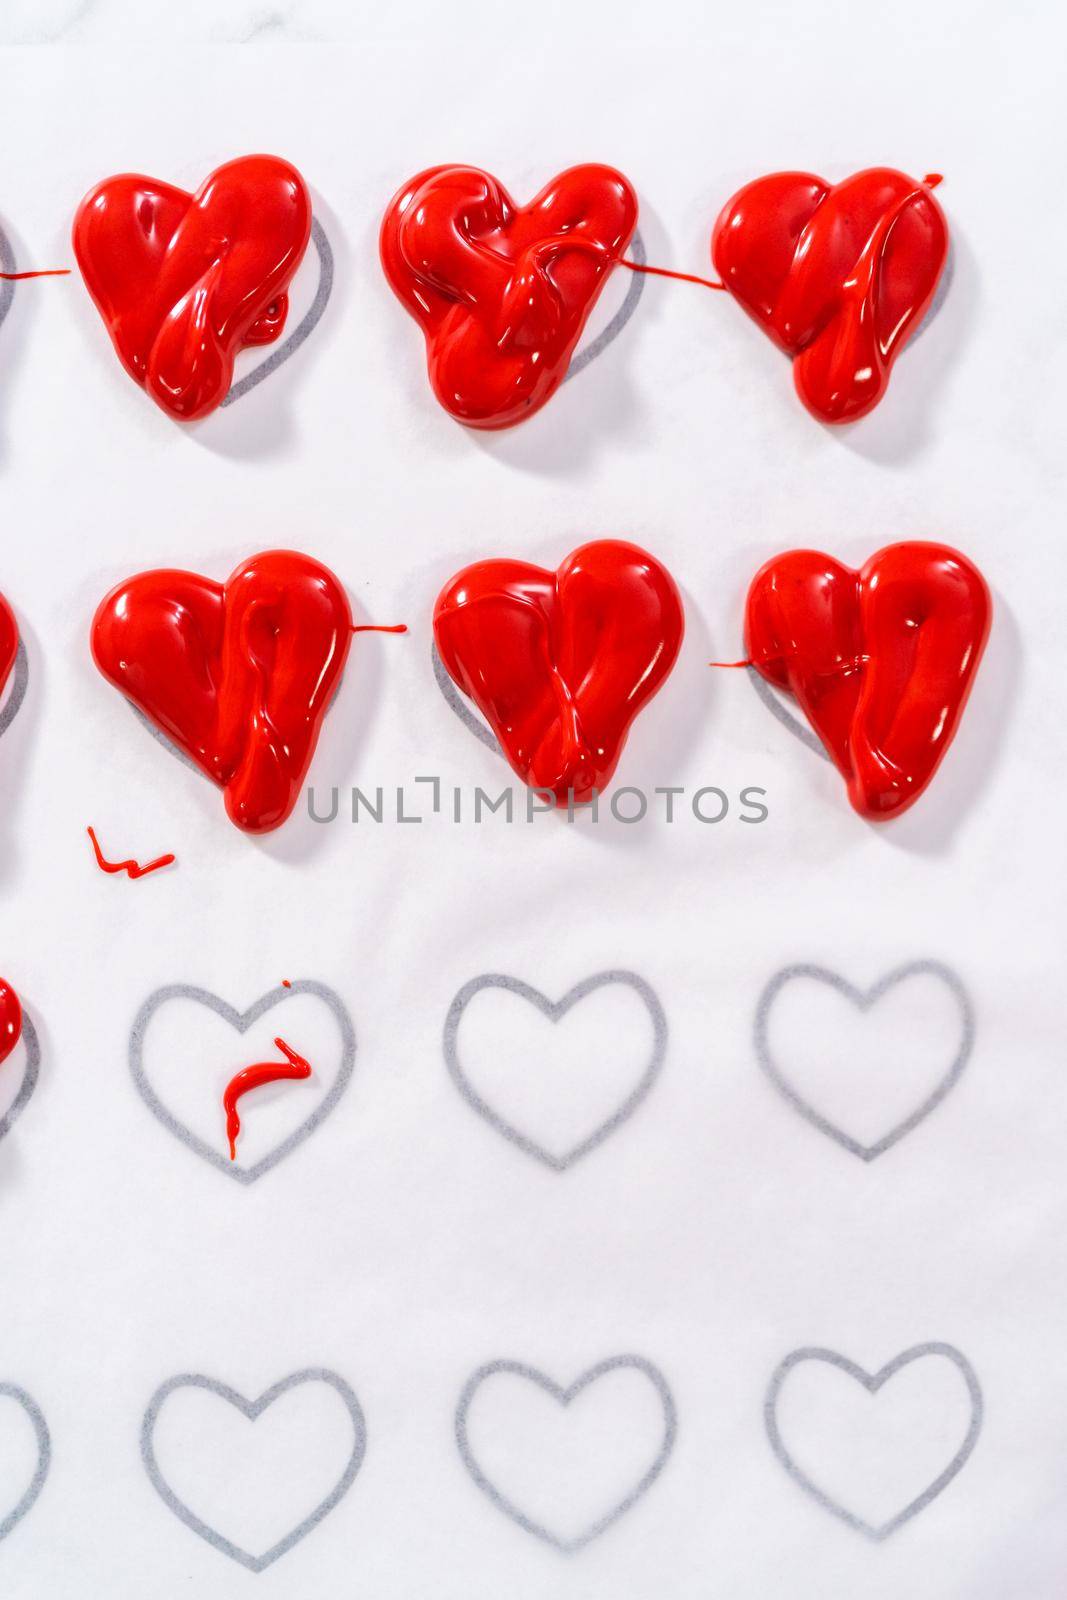 Chocolate Cookies with Chocolate Hearts by arinahabich